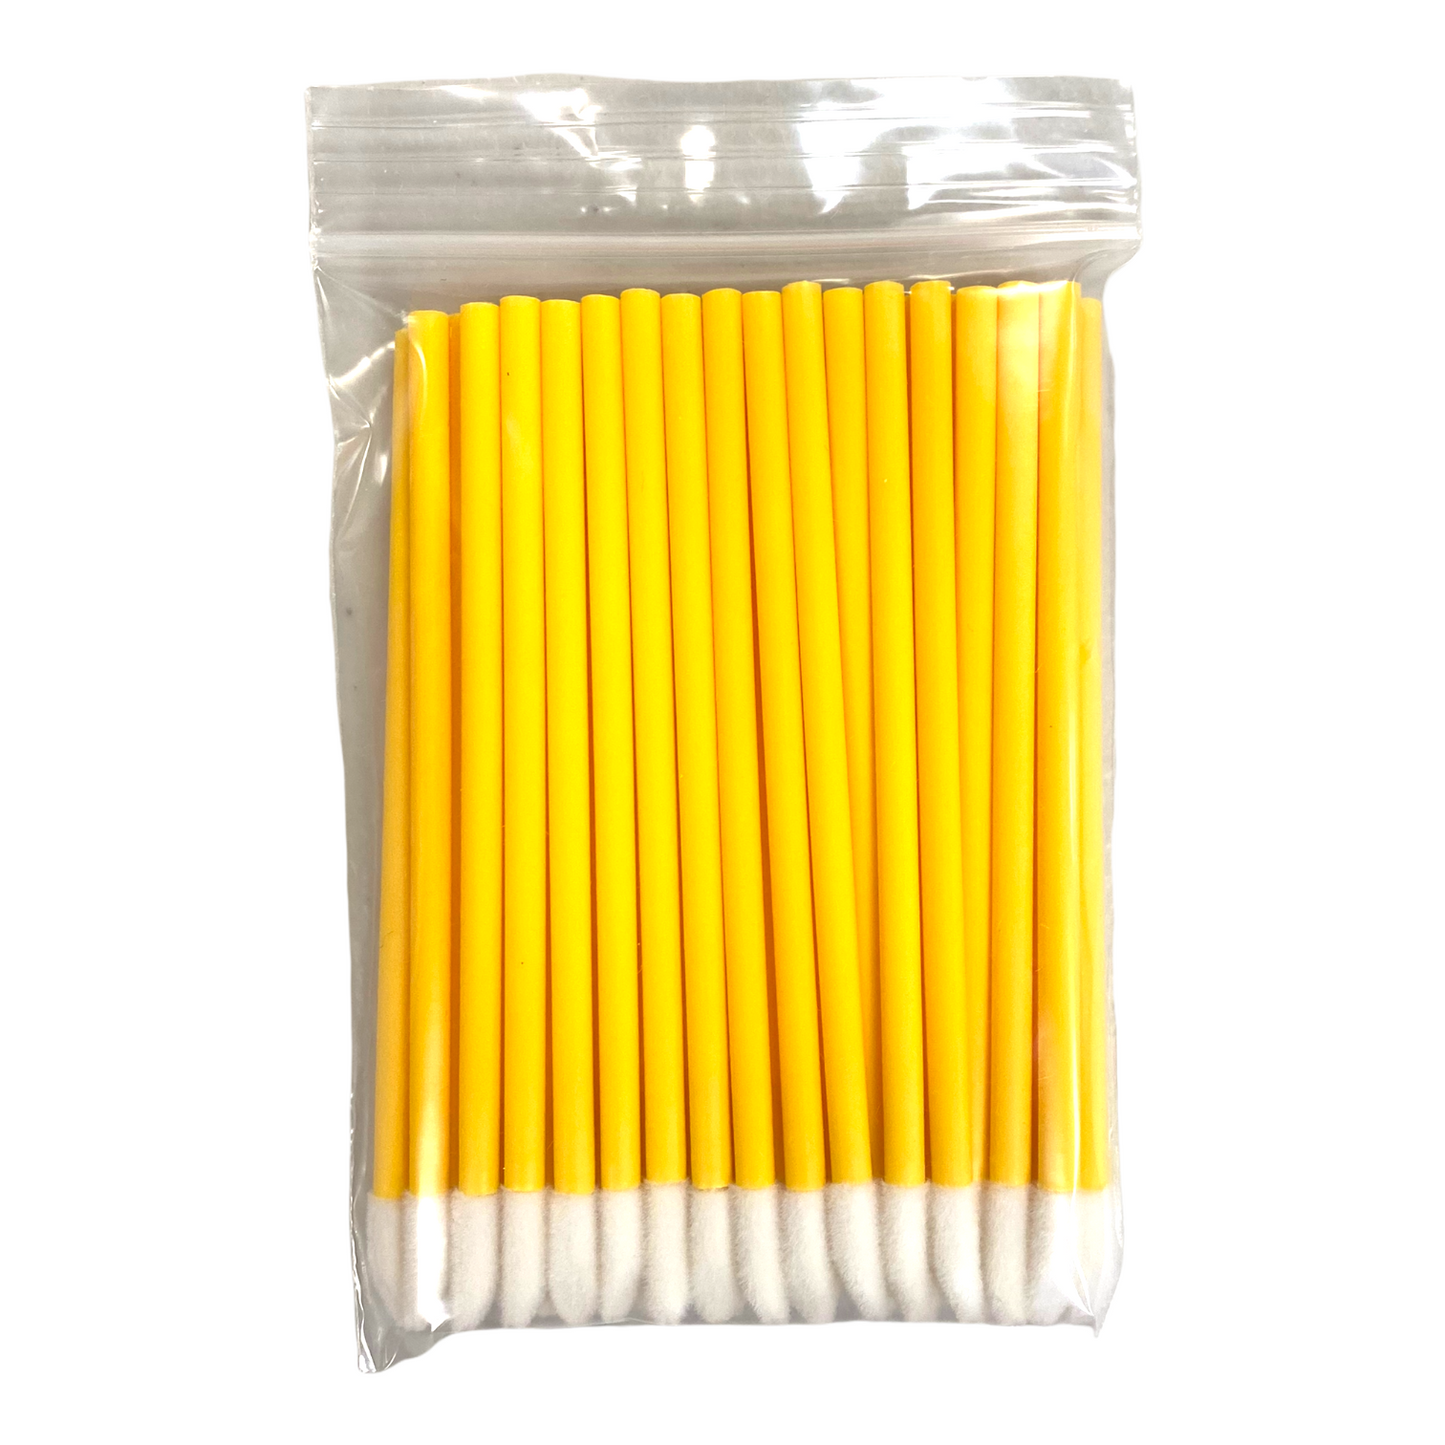 Yellow Disposable Lip Gloss Applicators (50 pcs)